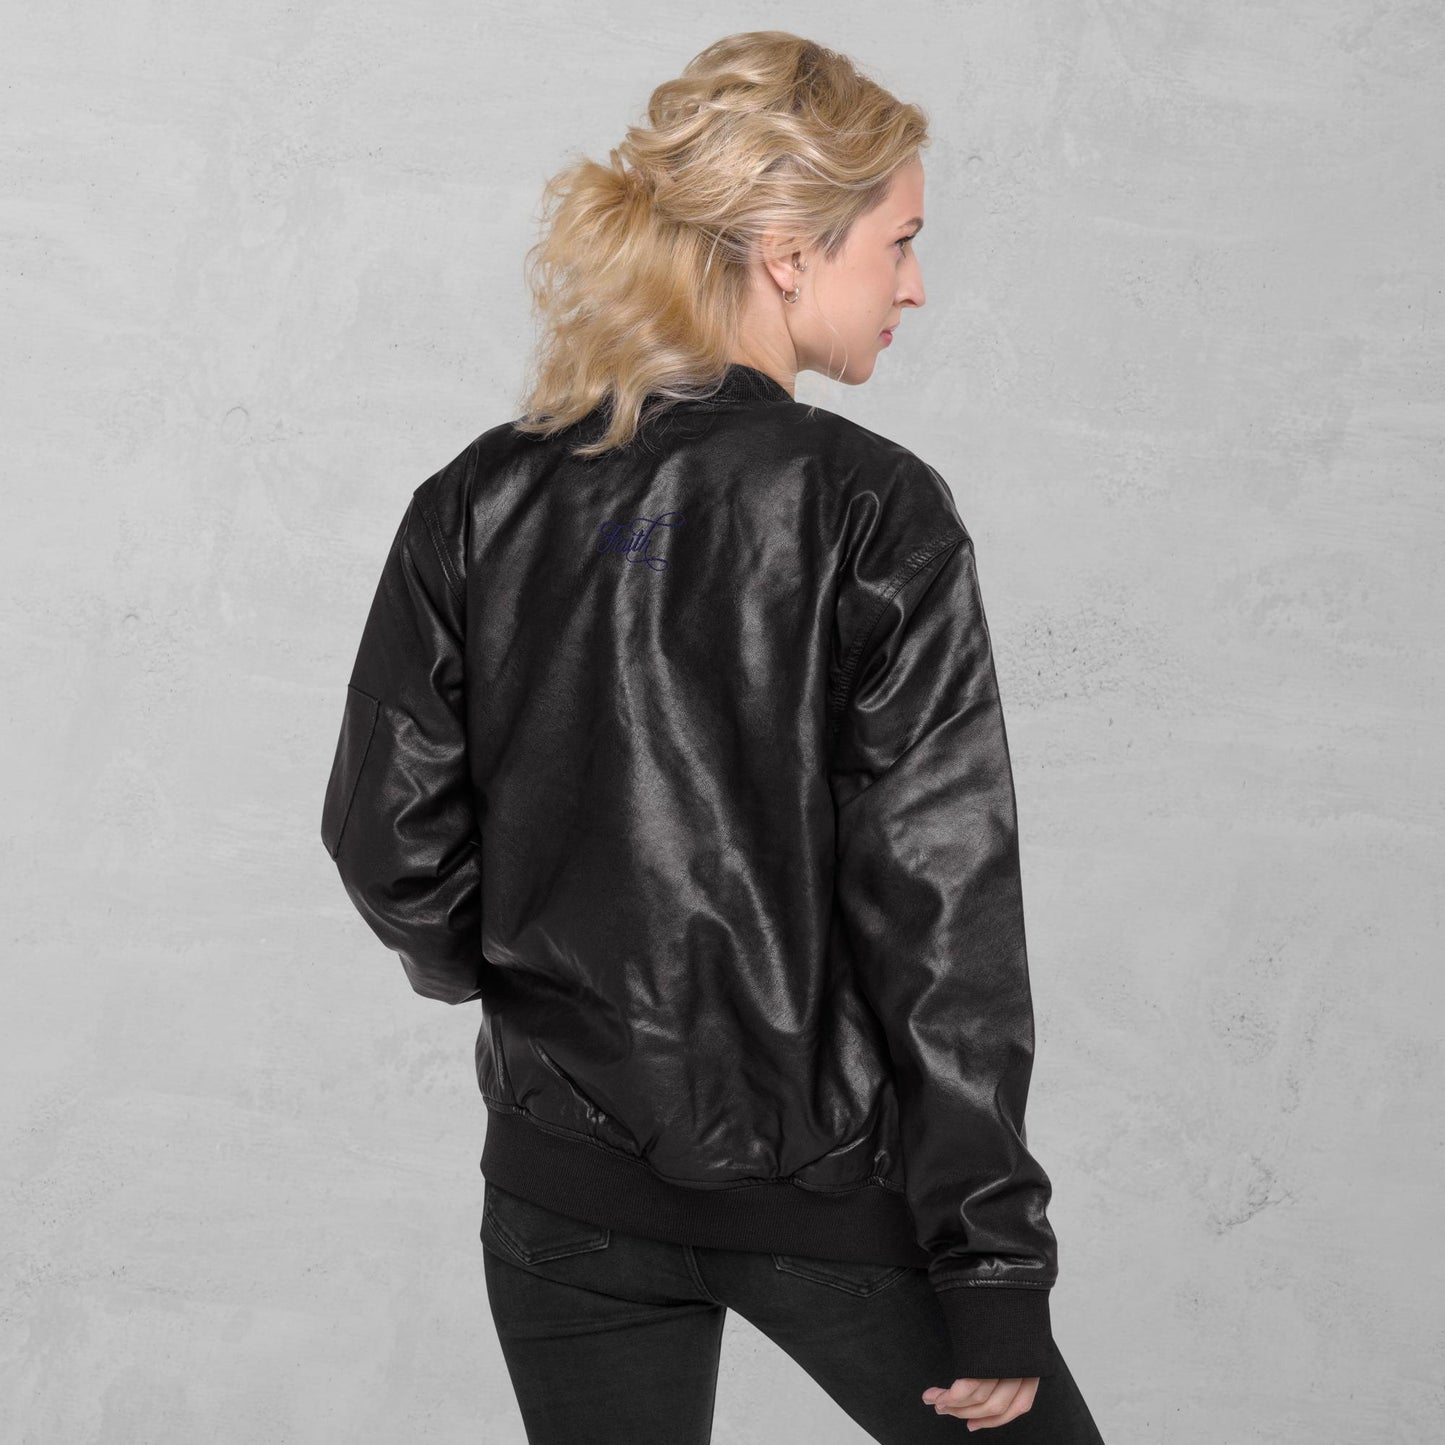 J.A Faith Women's Leather Bomber Jacket